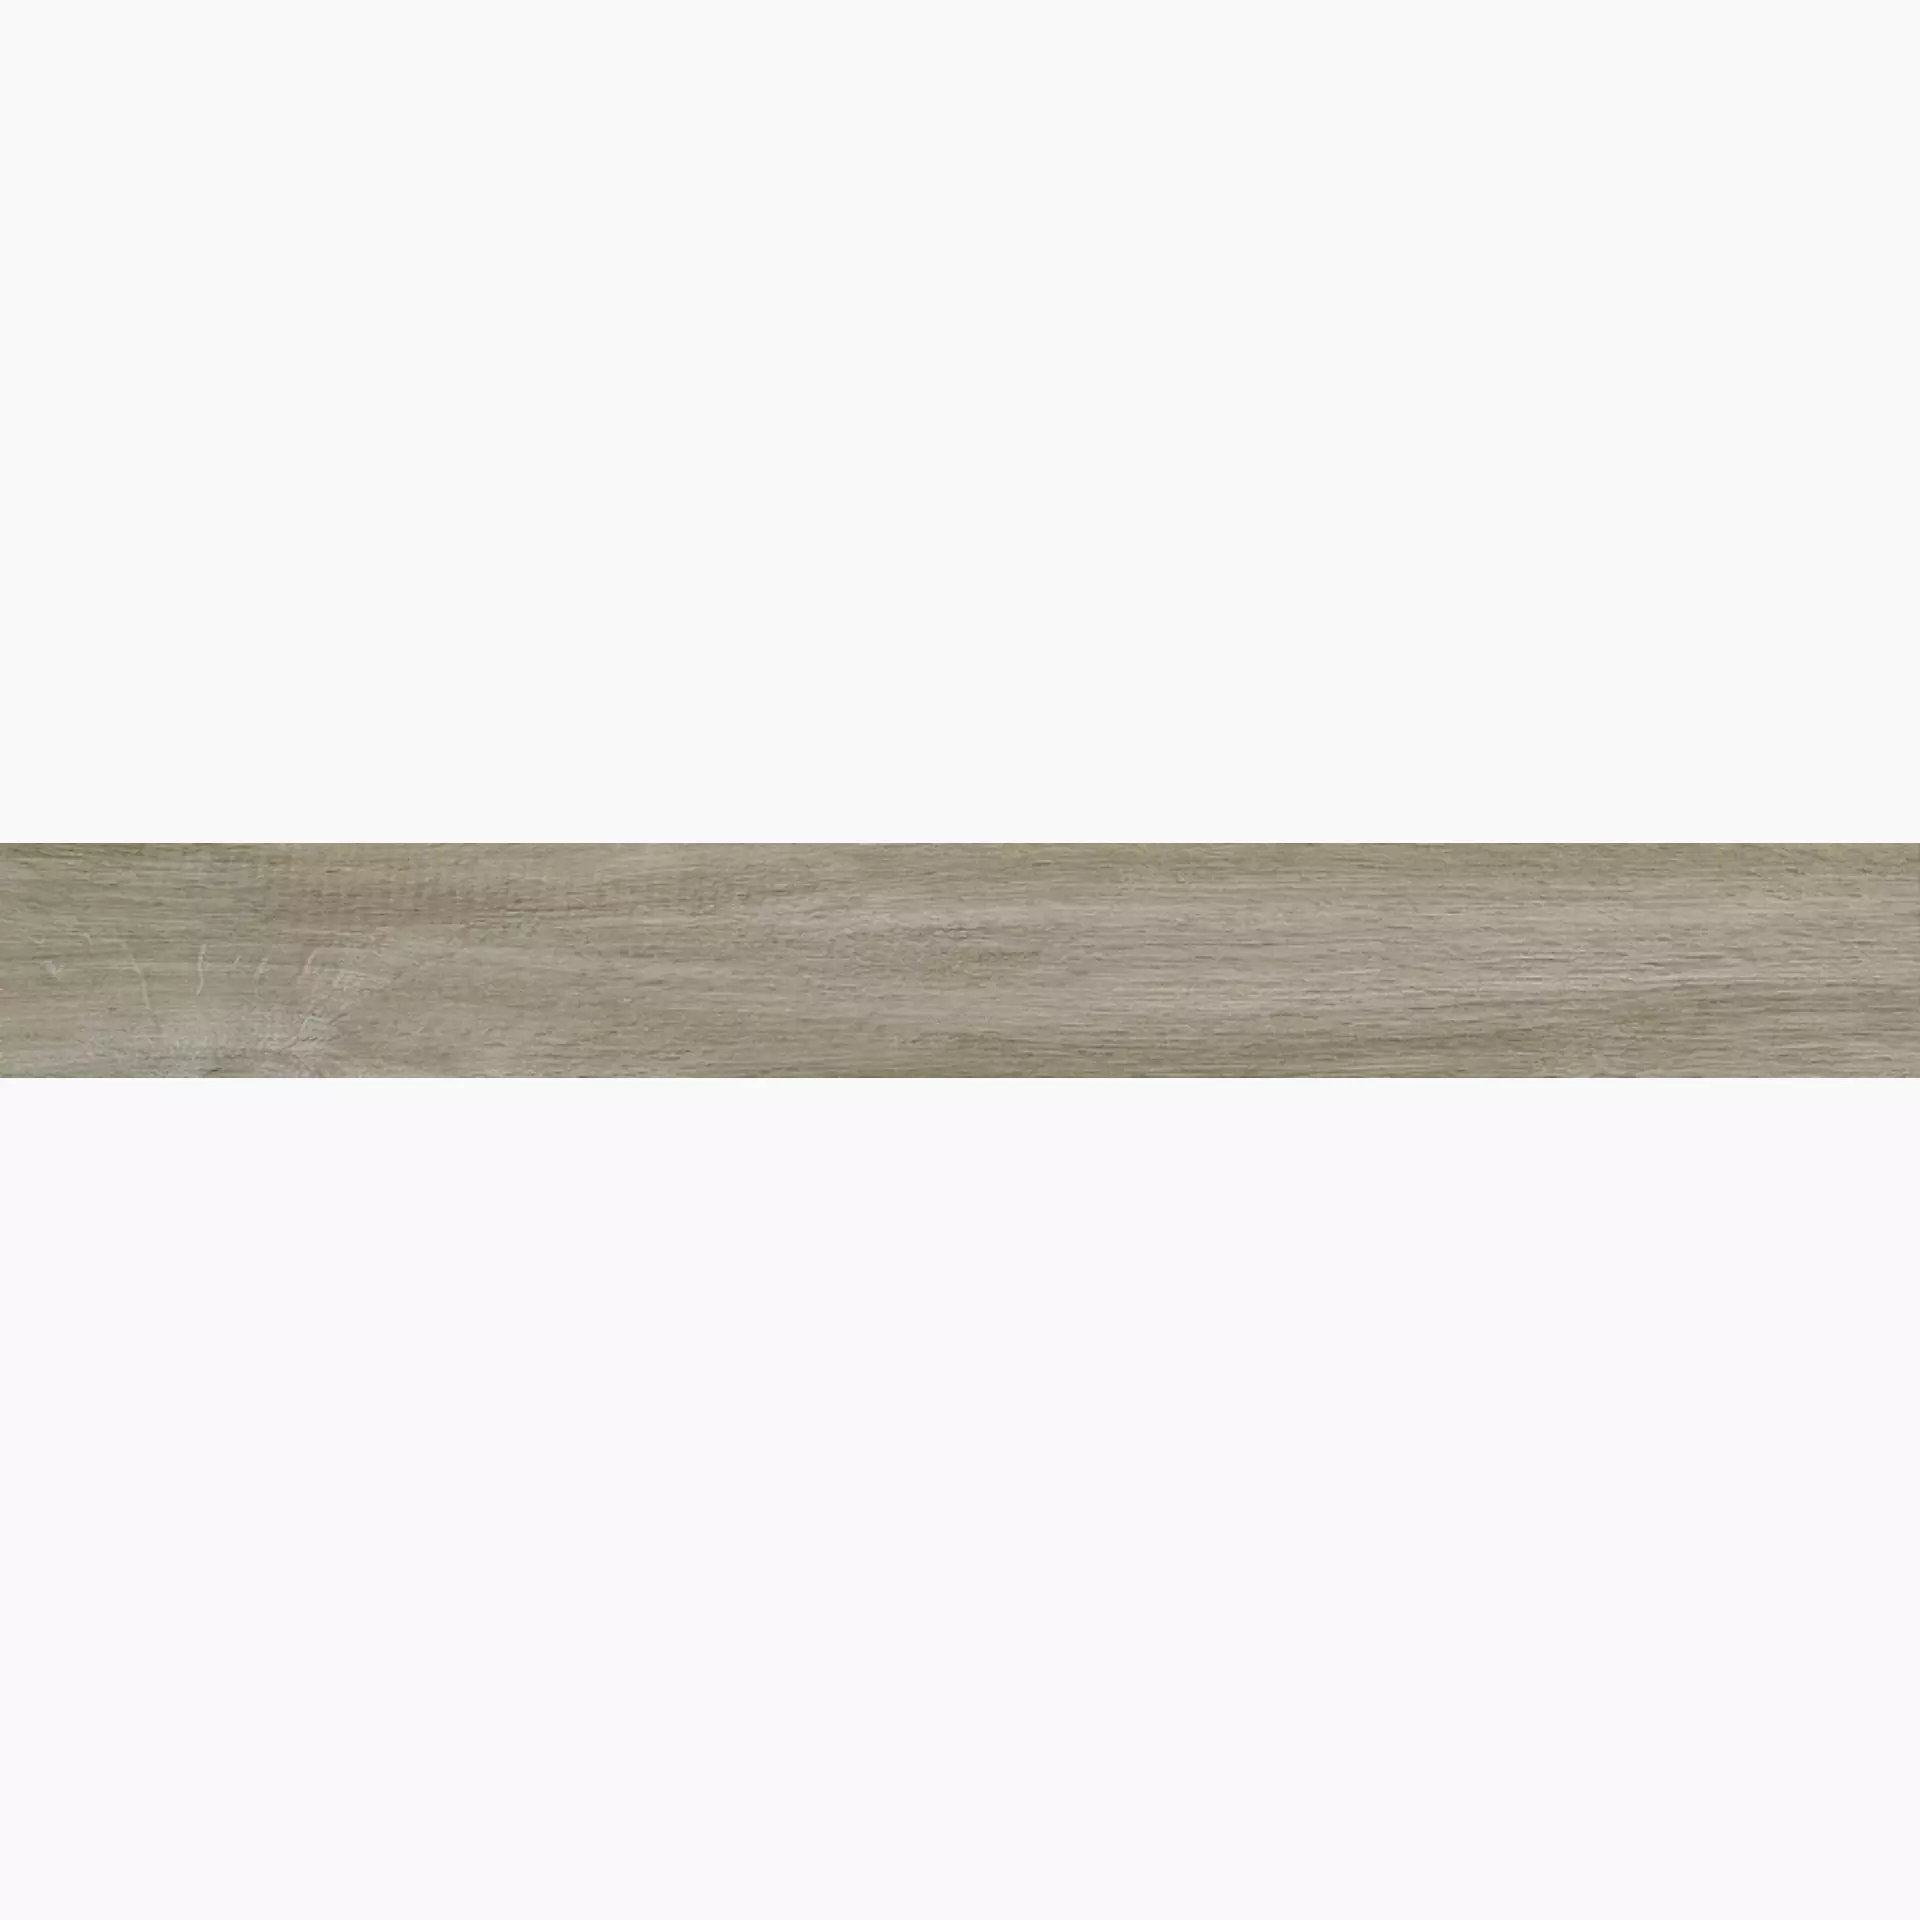 Iris E-Wood Grey Lappato Vintage 898022 11x90cm 9mm